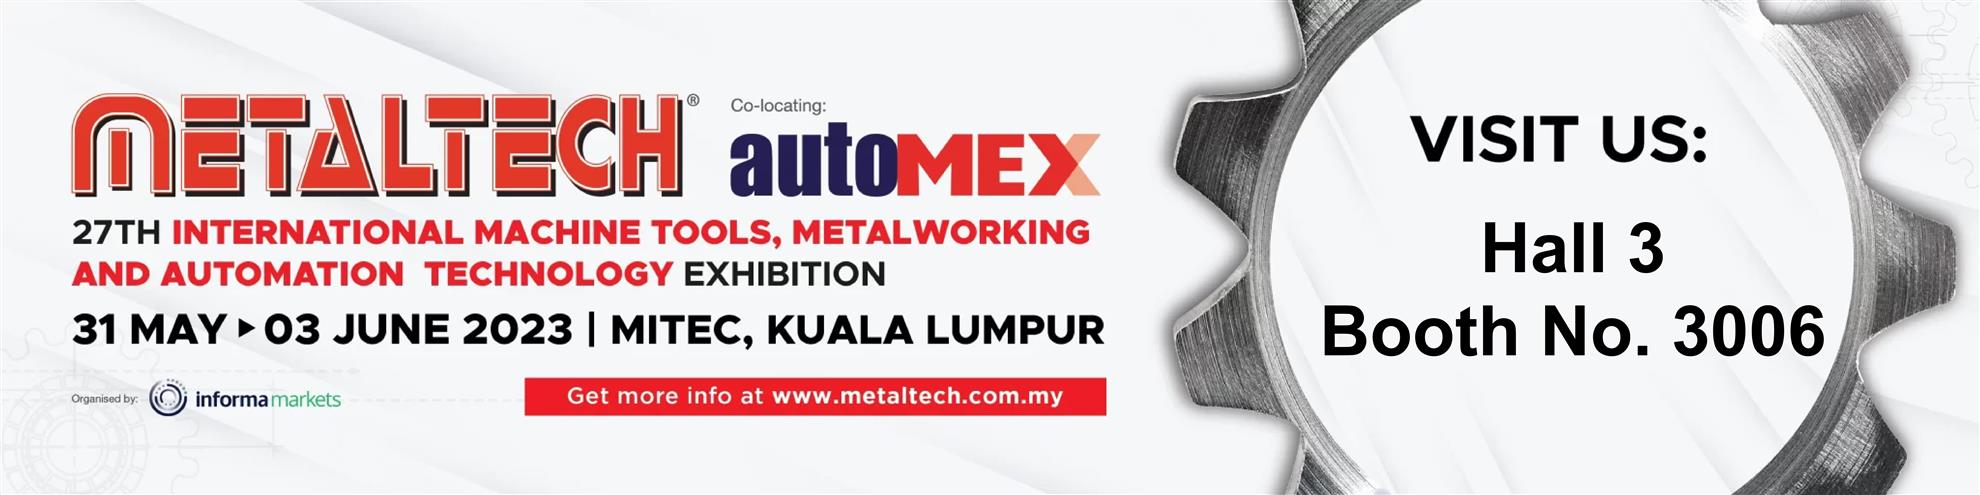 METALTECH & AUTOMEX - Malaysia 2023